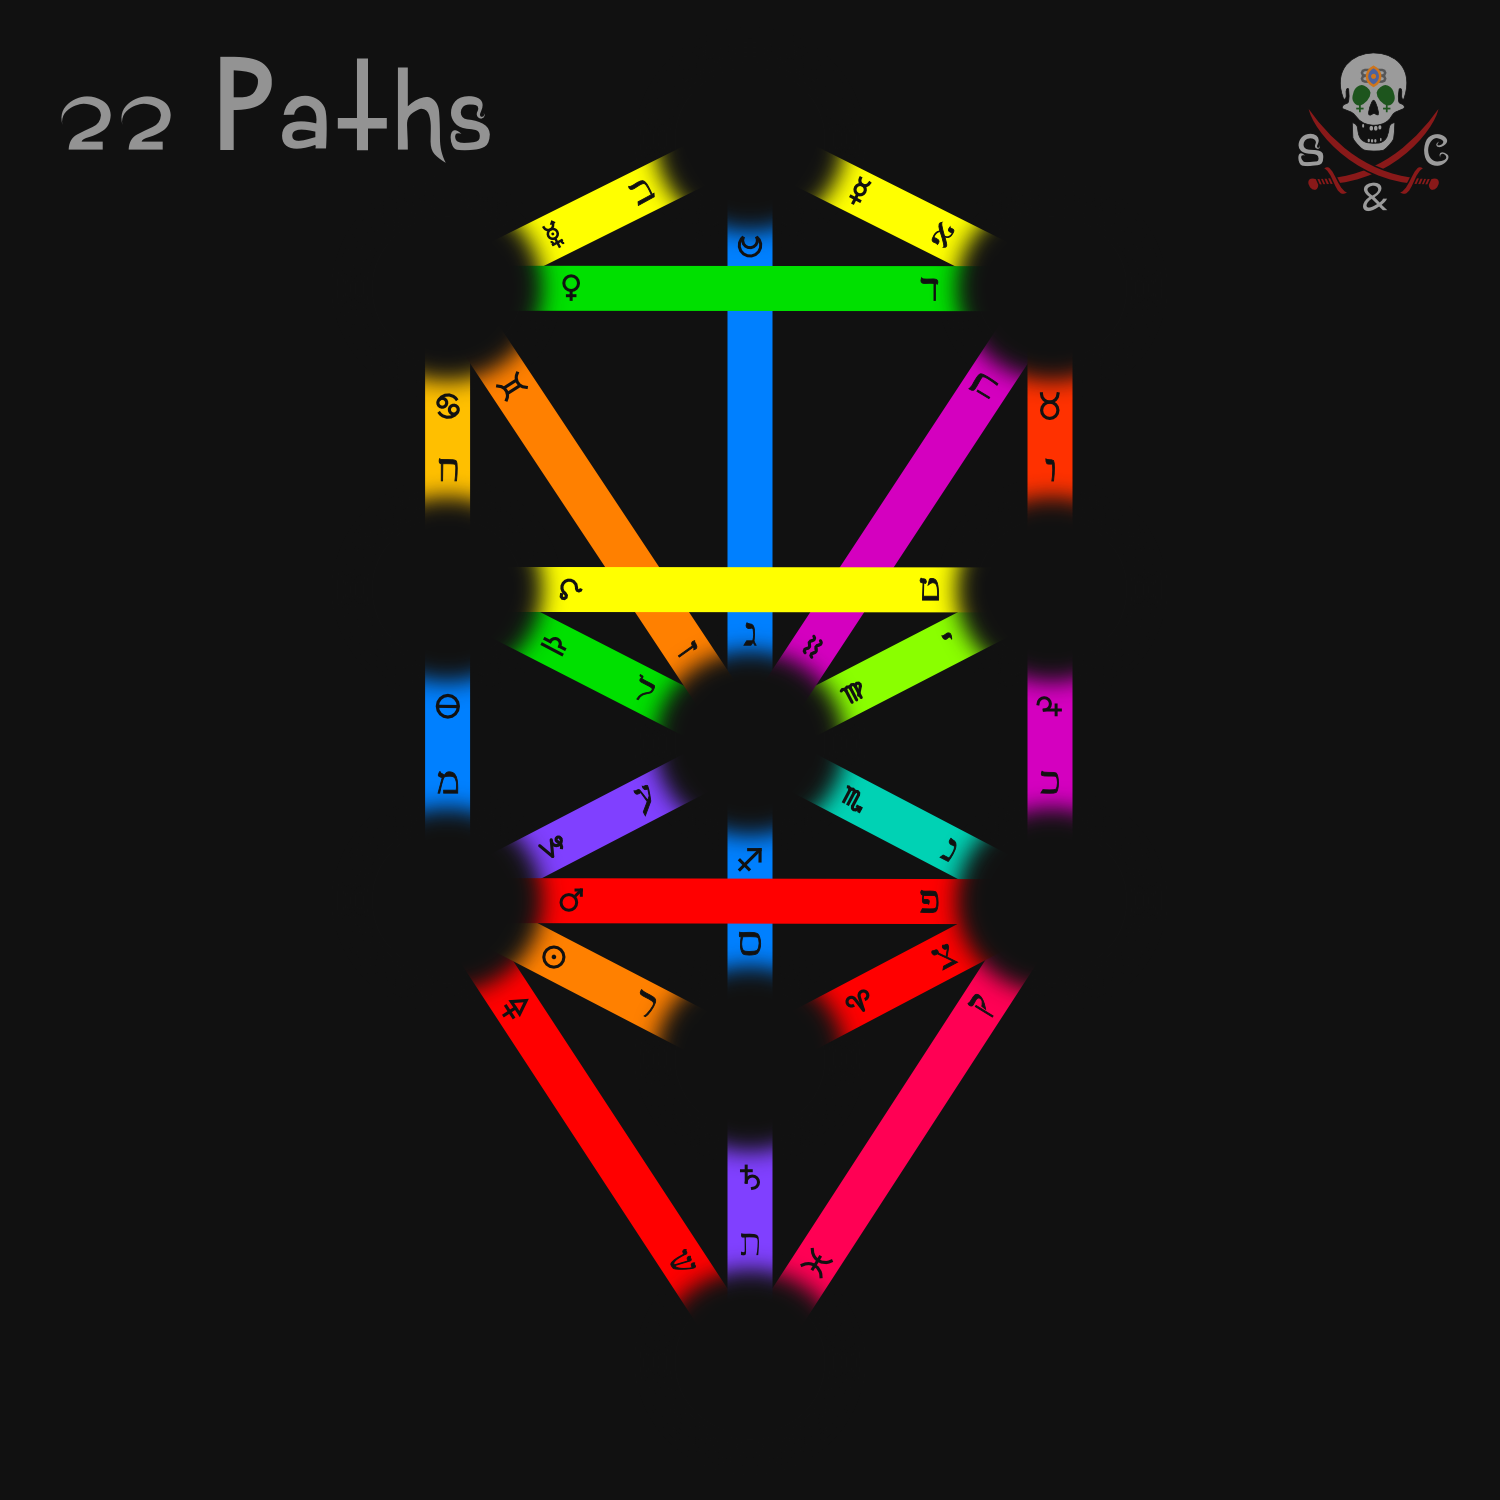 Paths